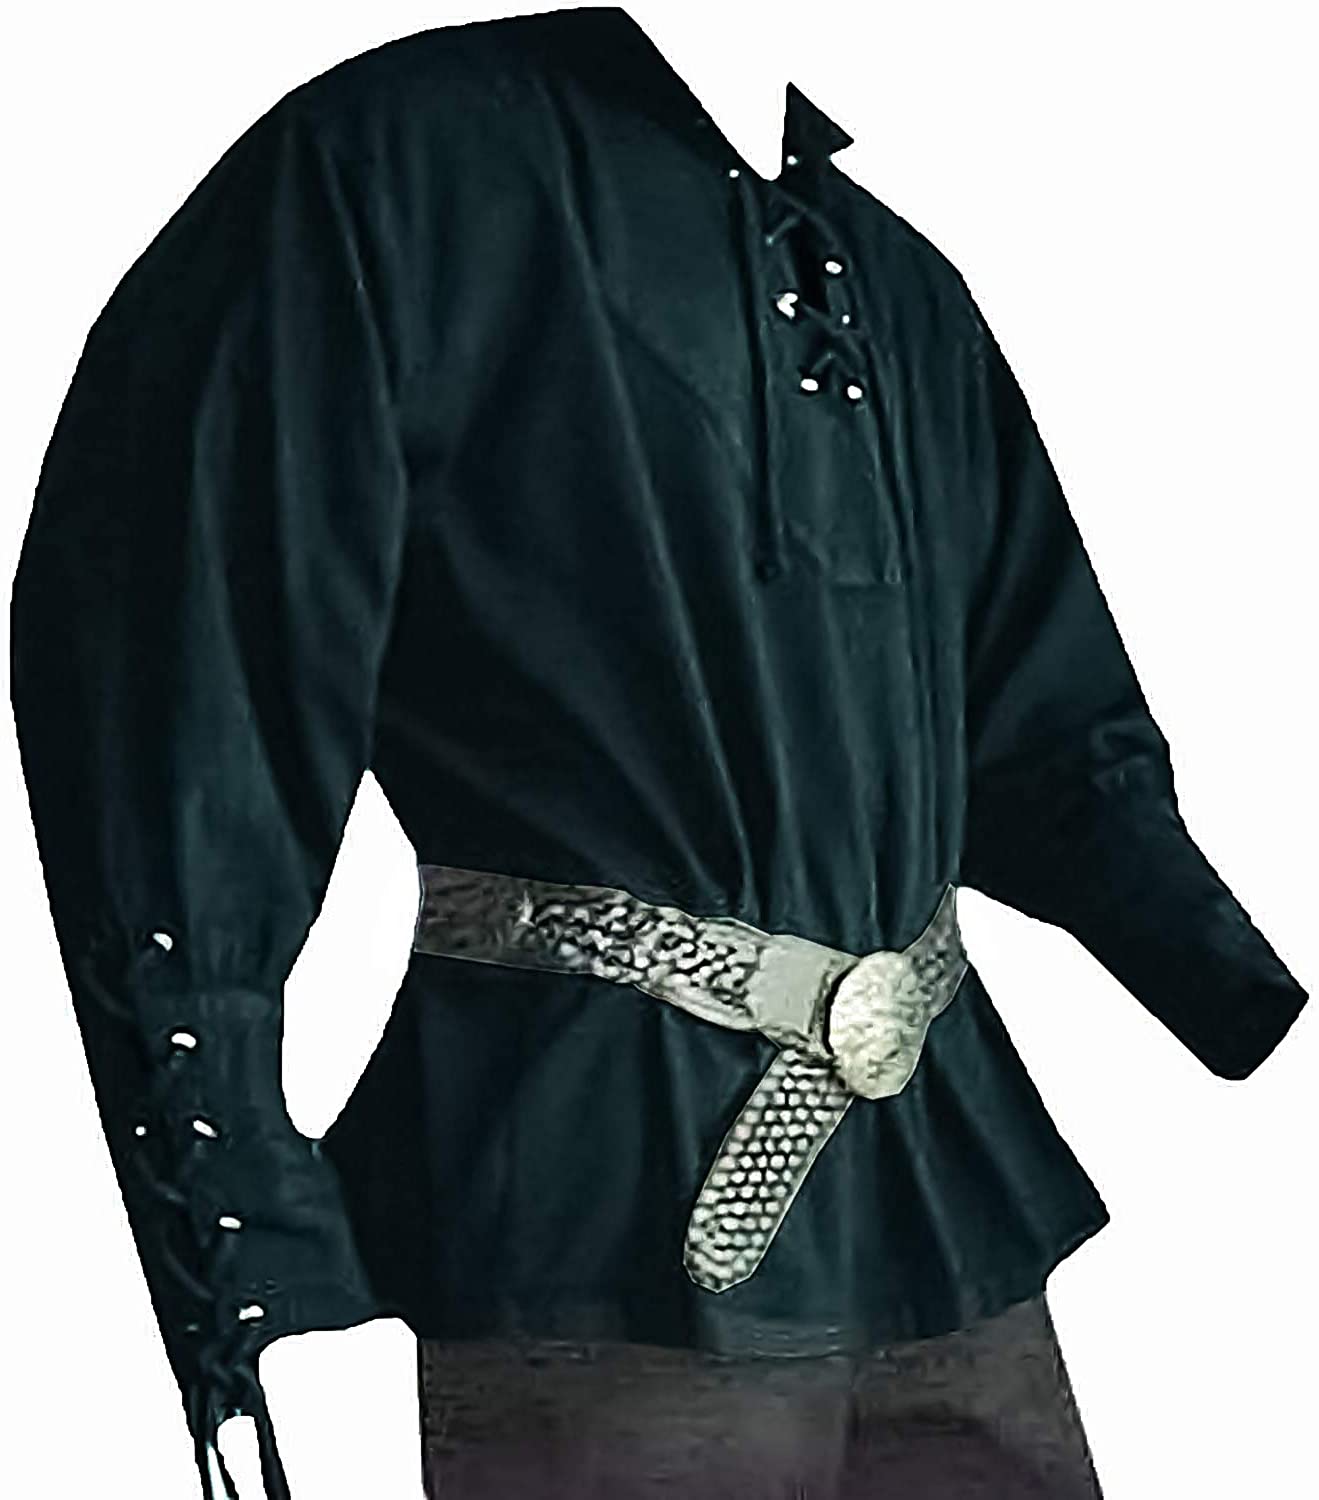 Men’s Scottish Shirt Cotton and Linen Solid Color Long Sleeve Lace Up Retro Medieval Renaissance Pirate Costume 